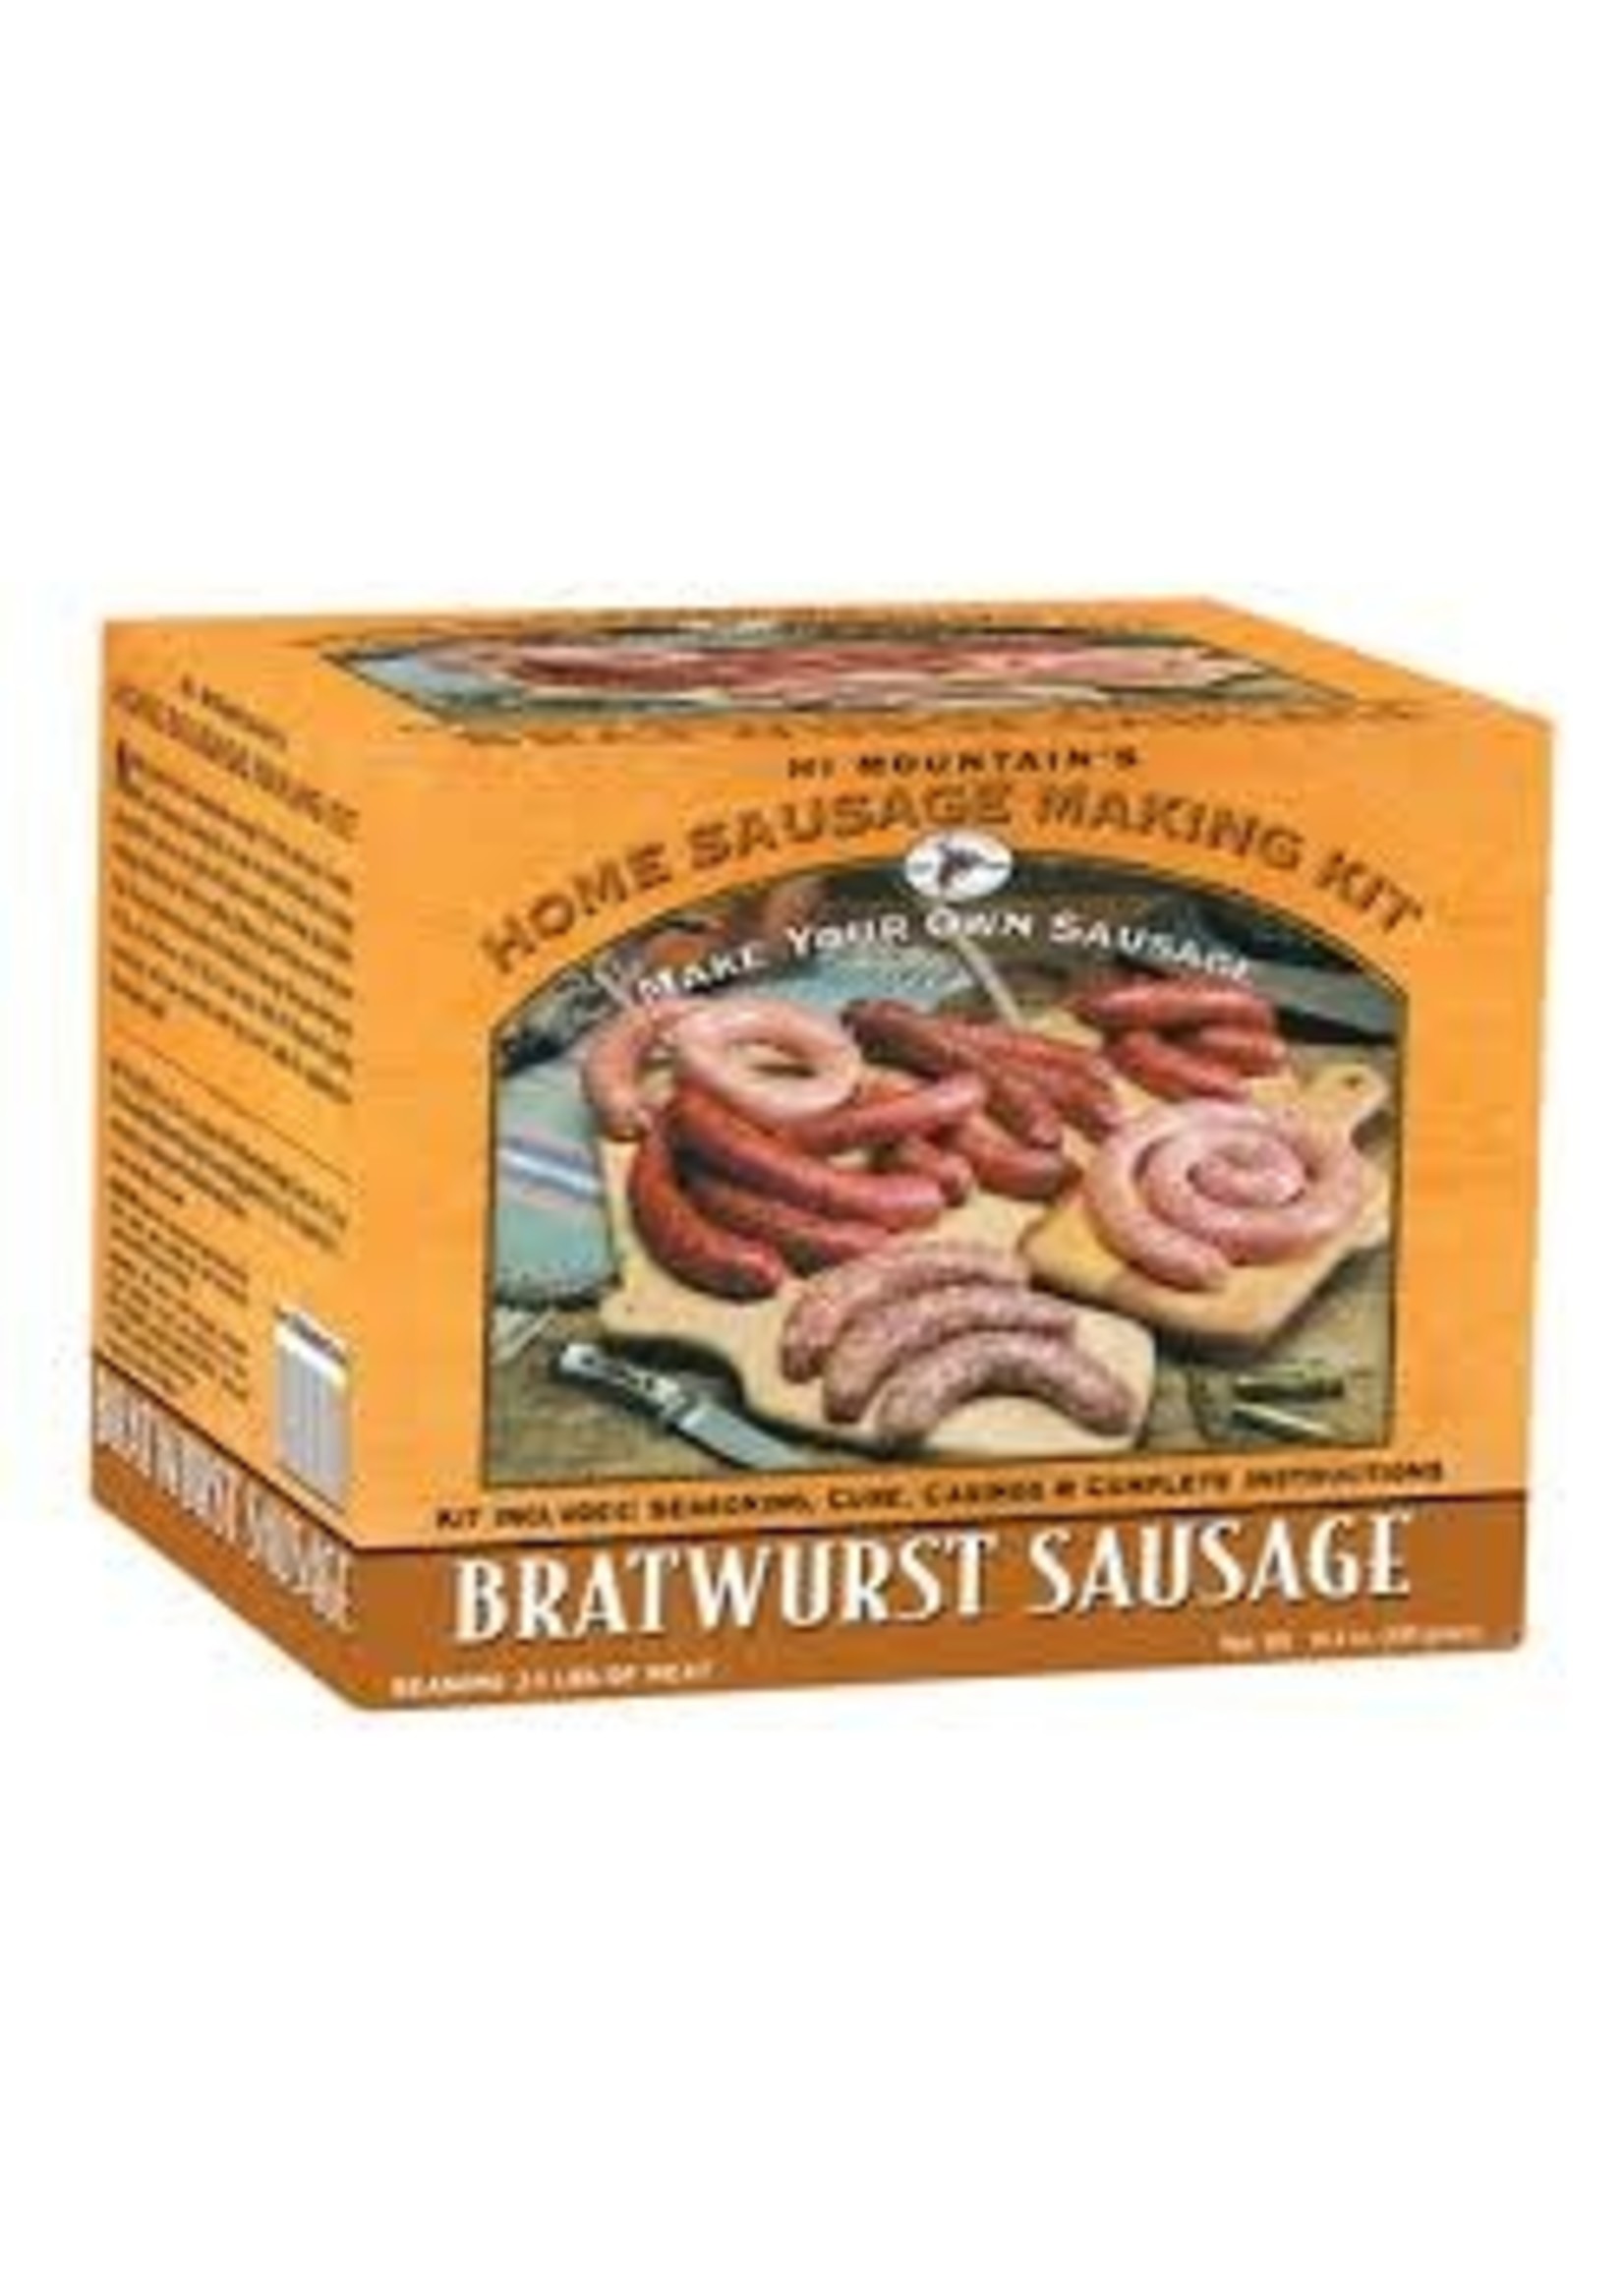 https://cdn.shoplightspeed.com/shops/625520/files/15230292/1652x2313x2/hi-mountain-hi-mountain-bratwurst-sausage-kit.jpg